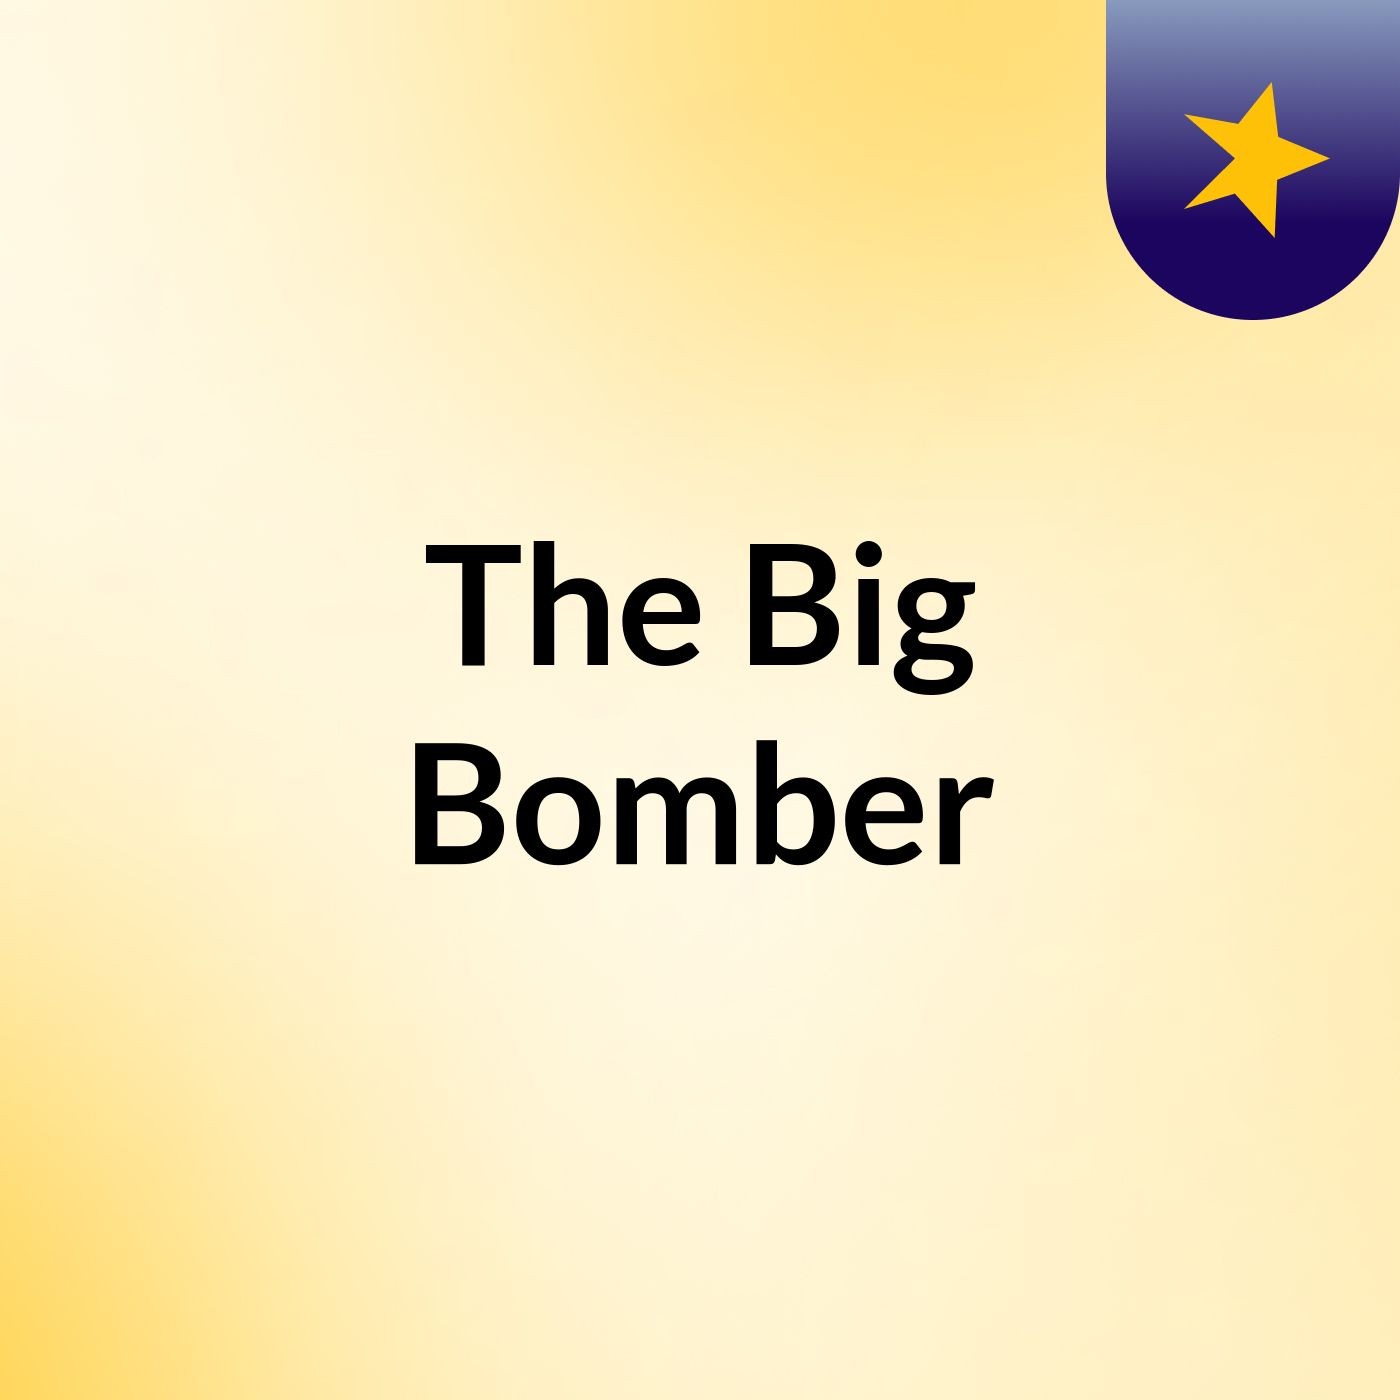 The Big Bomber